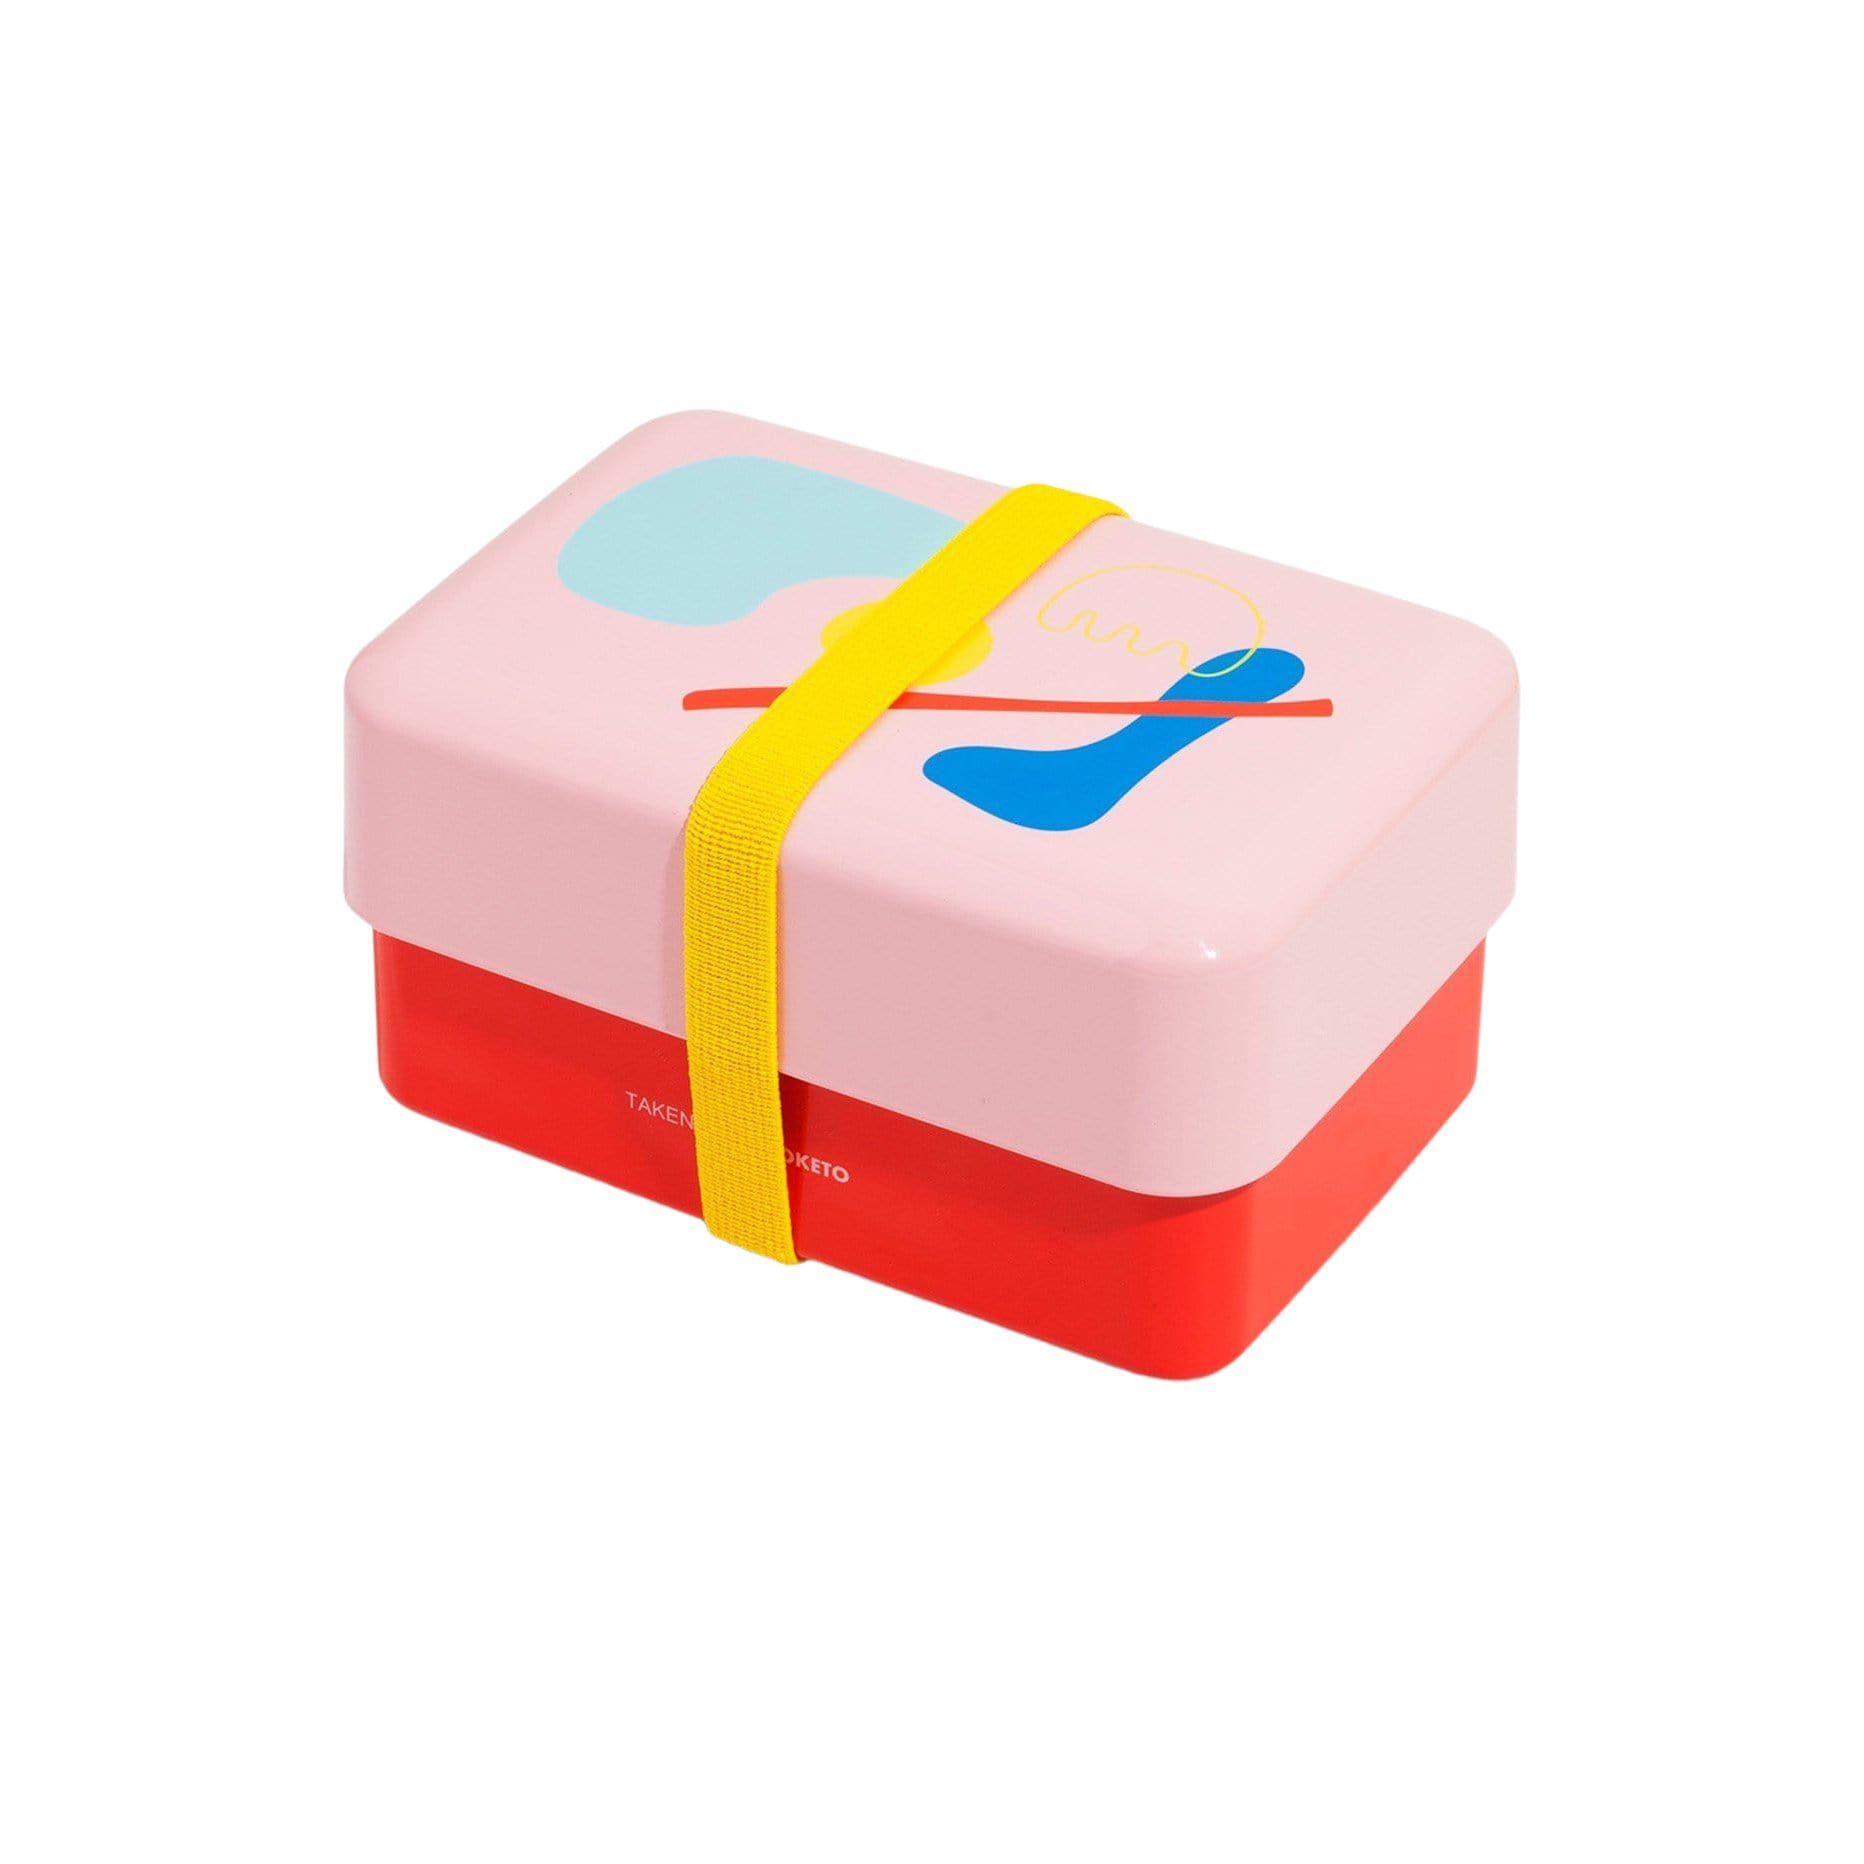 Poketo X Takenaka Limited-Edition Pink + Red Bento Box